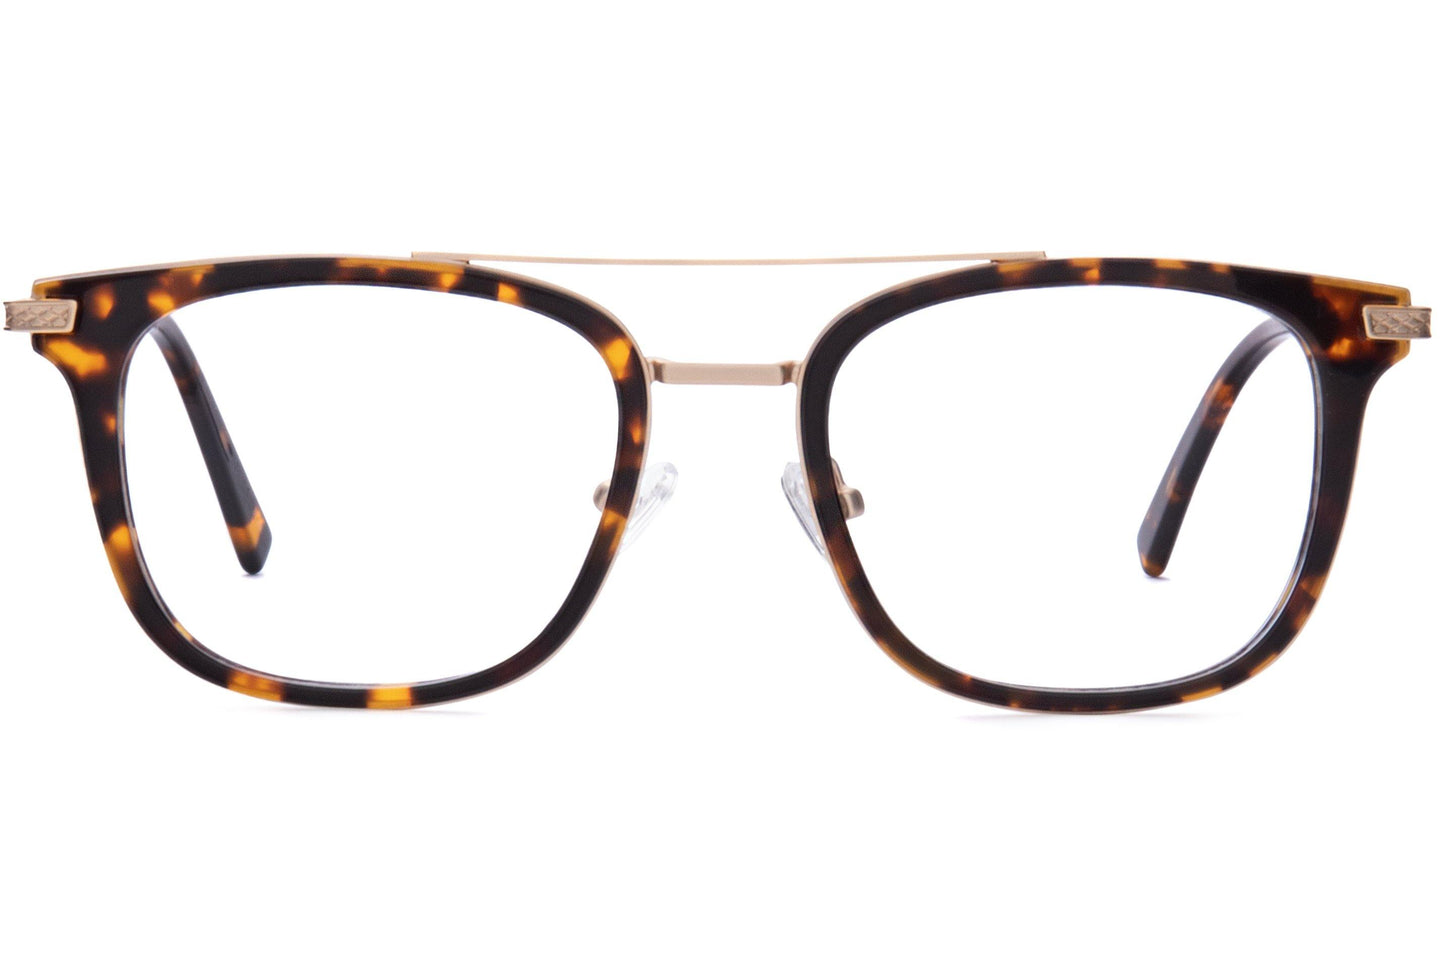 Chester | Baxter Phillips | Fashionable Prescription Eyewear